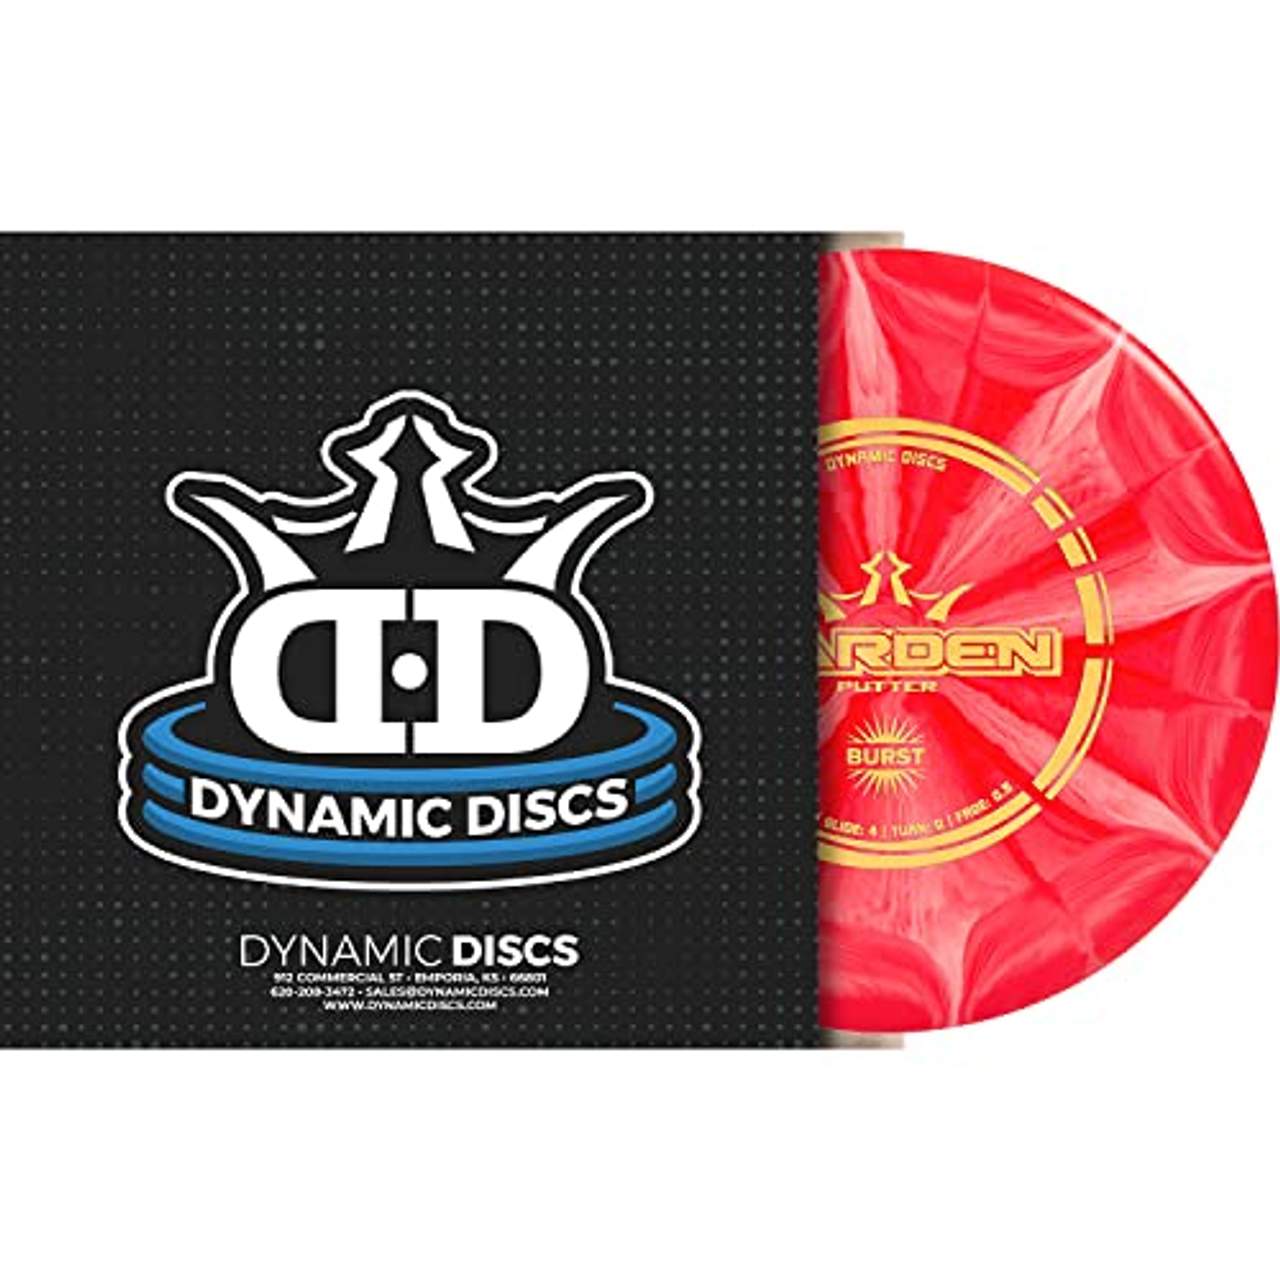 Dynamic Discs Prime Burst Warden Disc Golf Putter